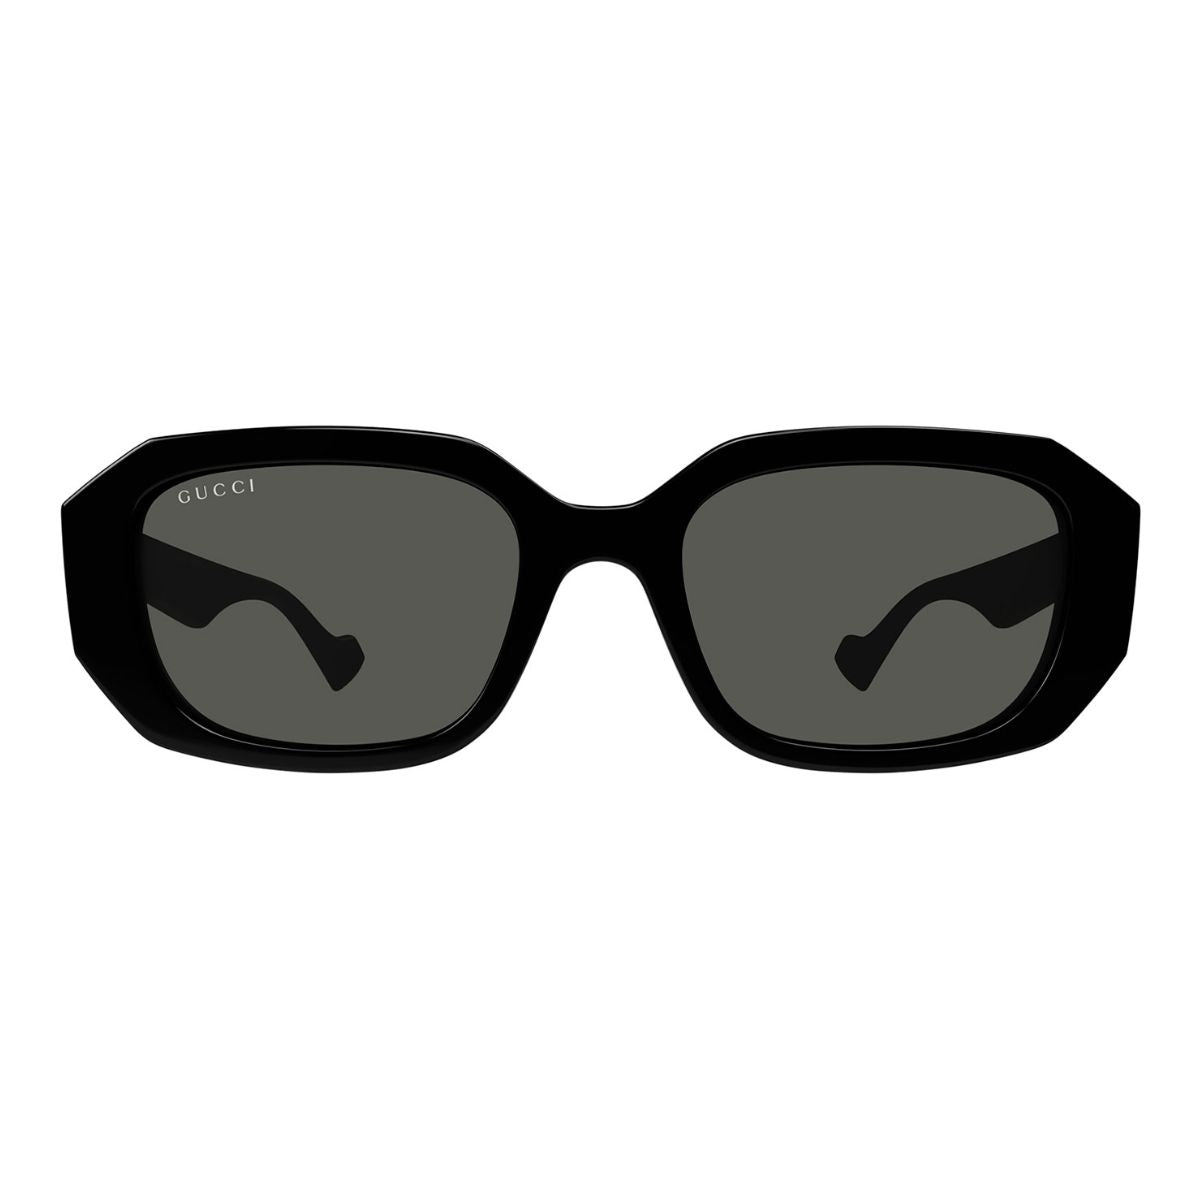 "Gucci GG1535S 001 Sunglasses - Optorium Collection"